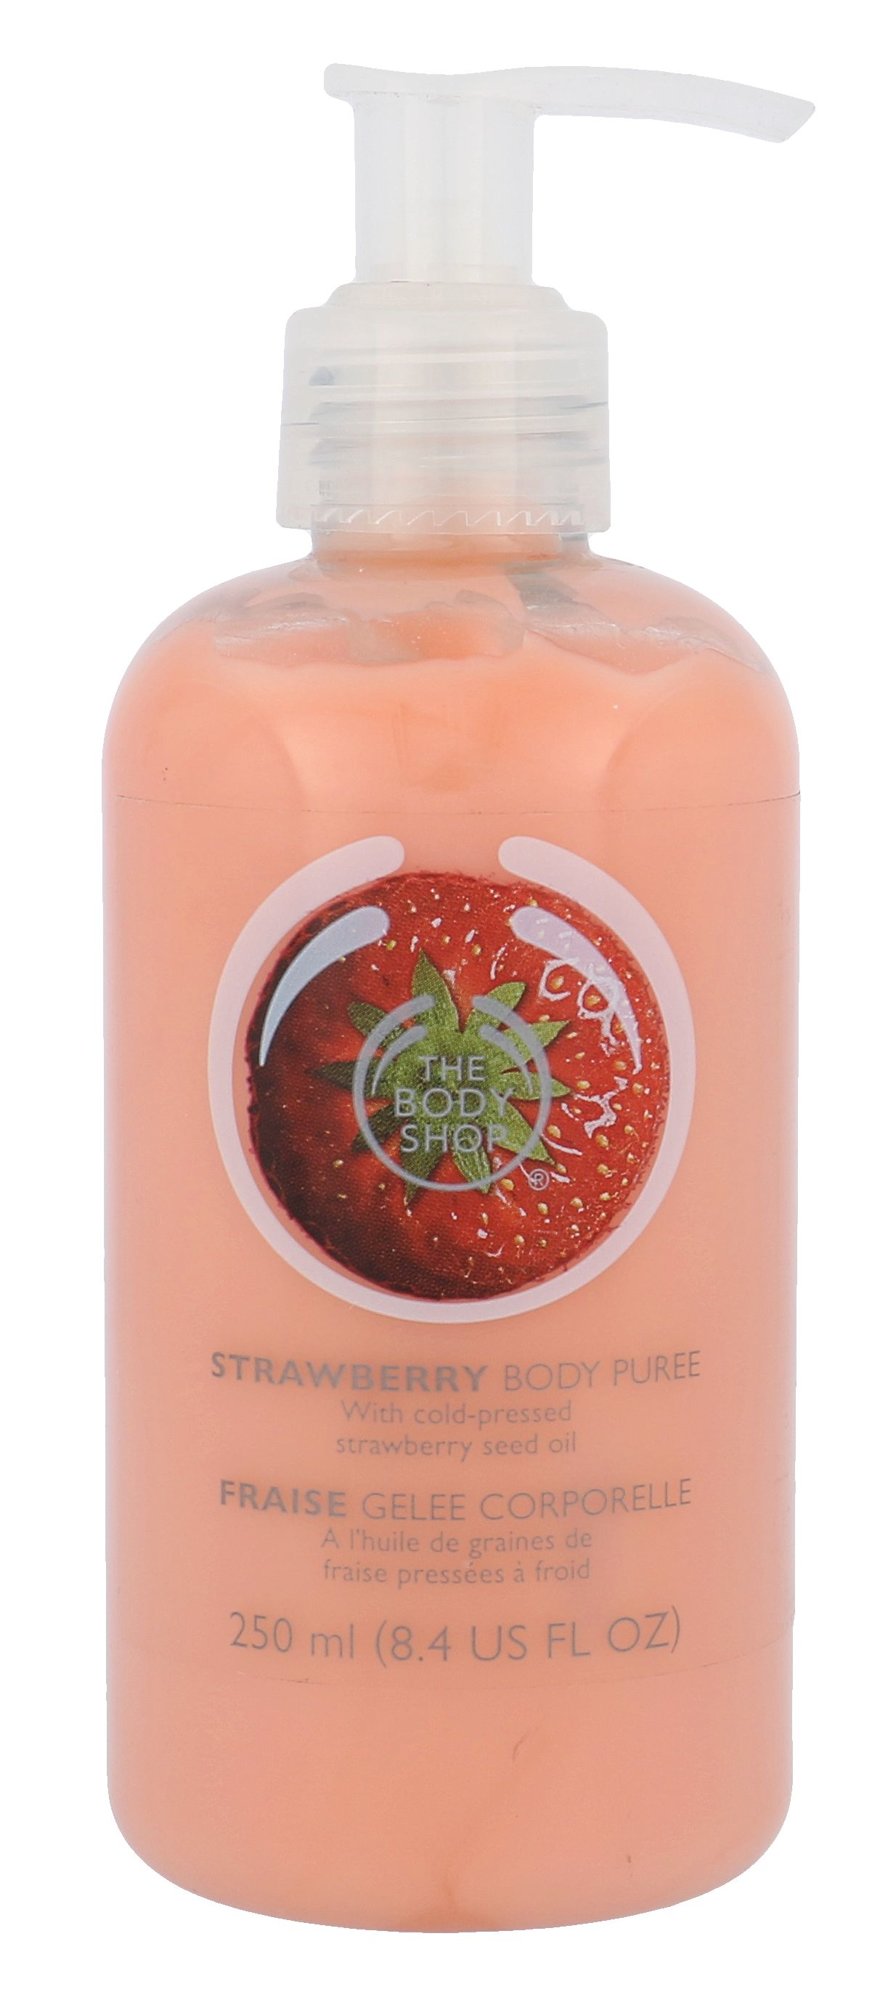 The Body Shop Strawberry Body Puree